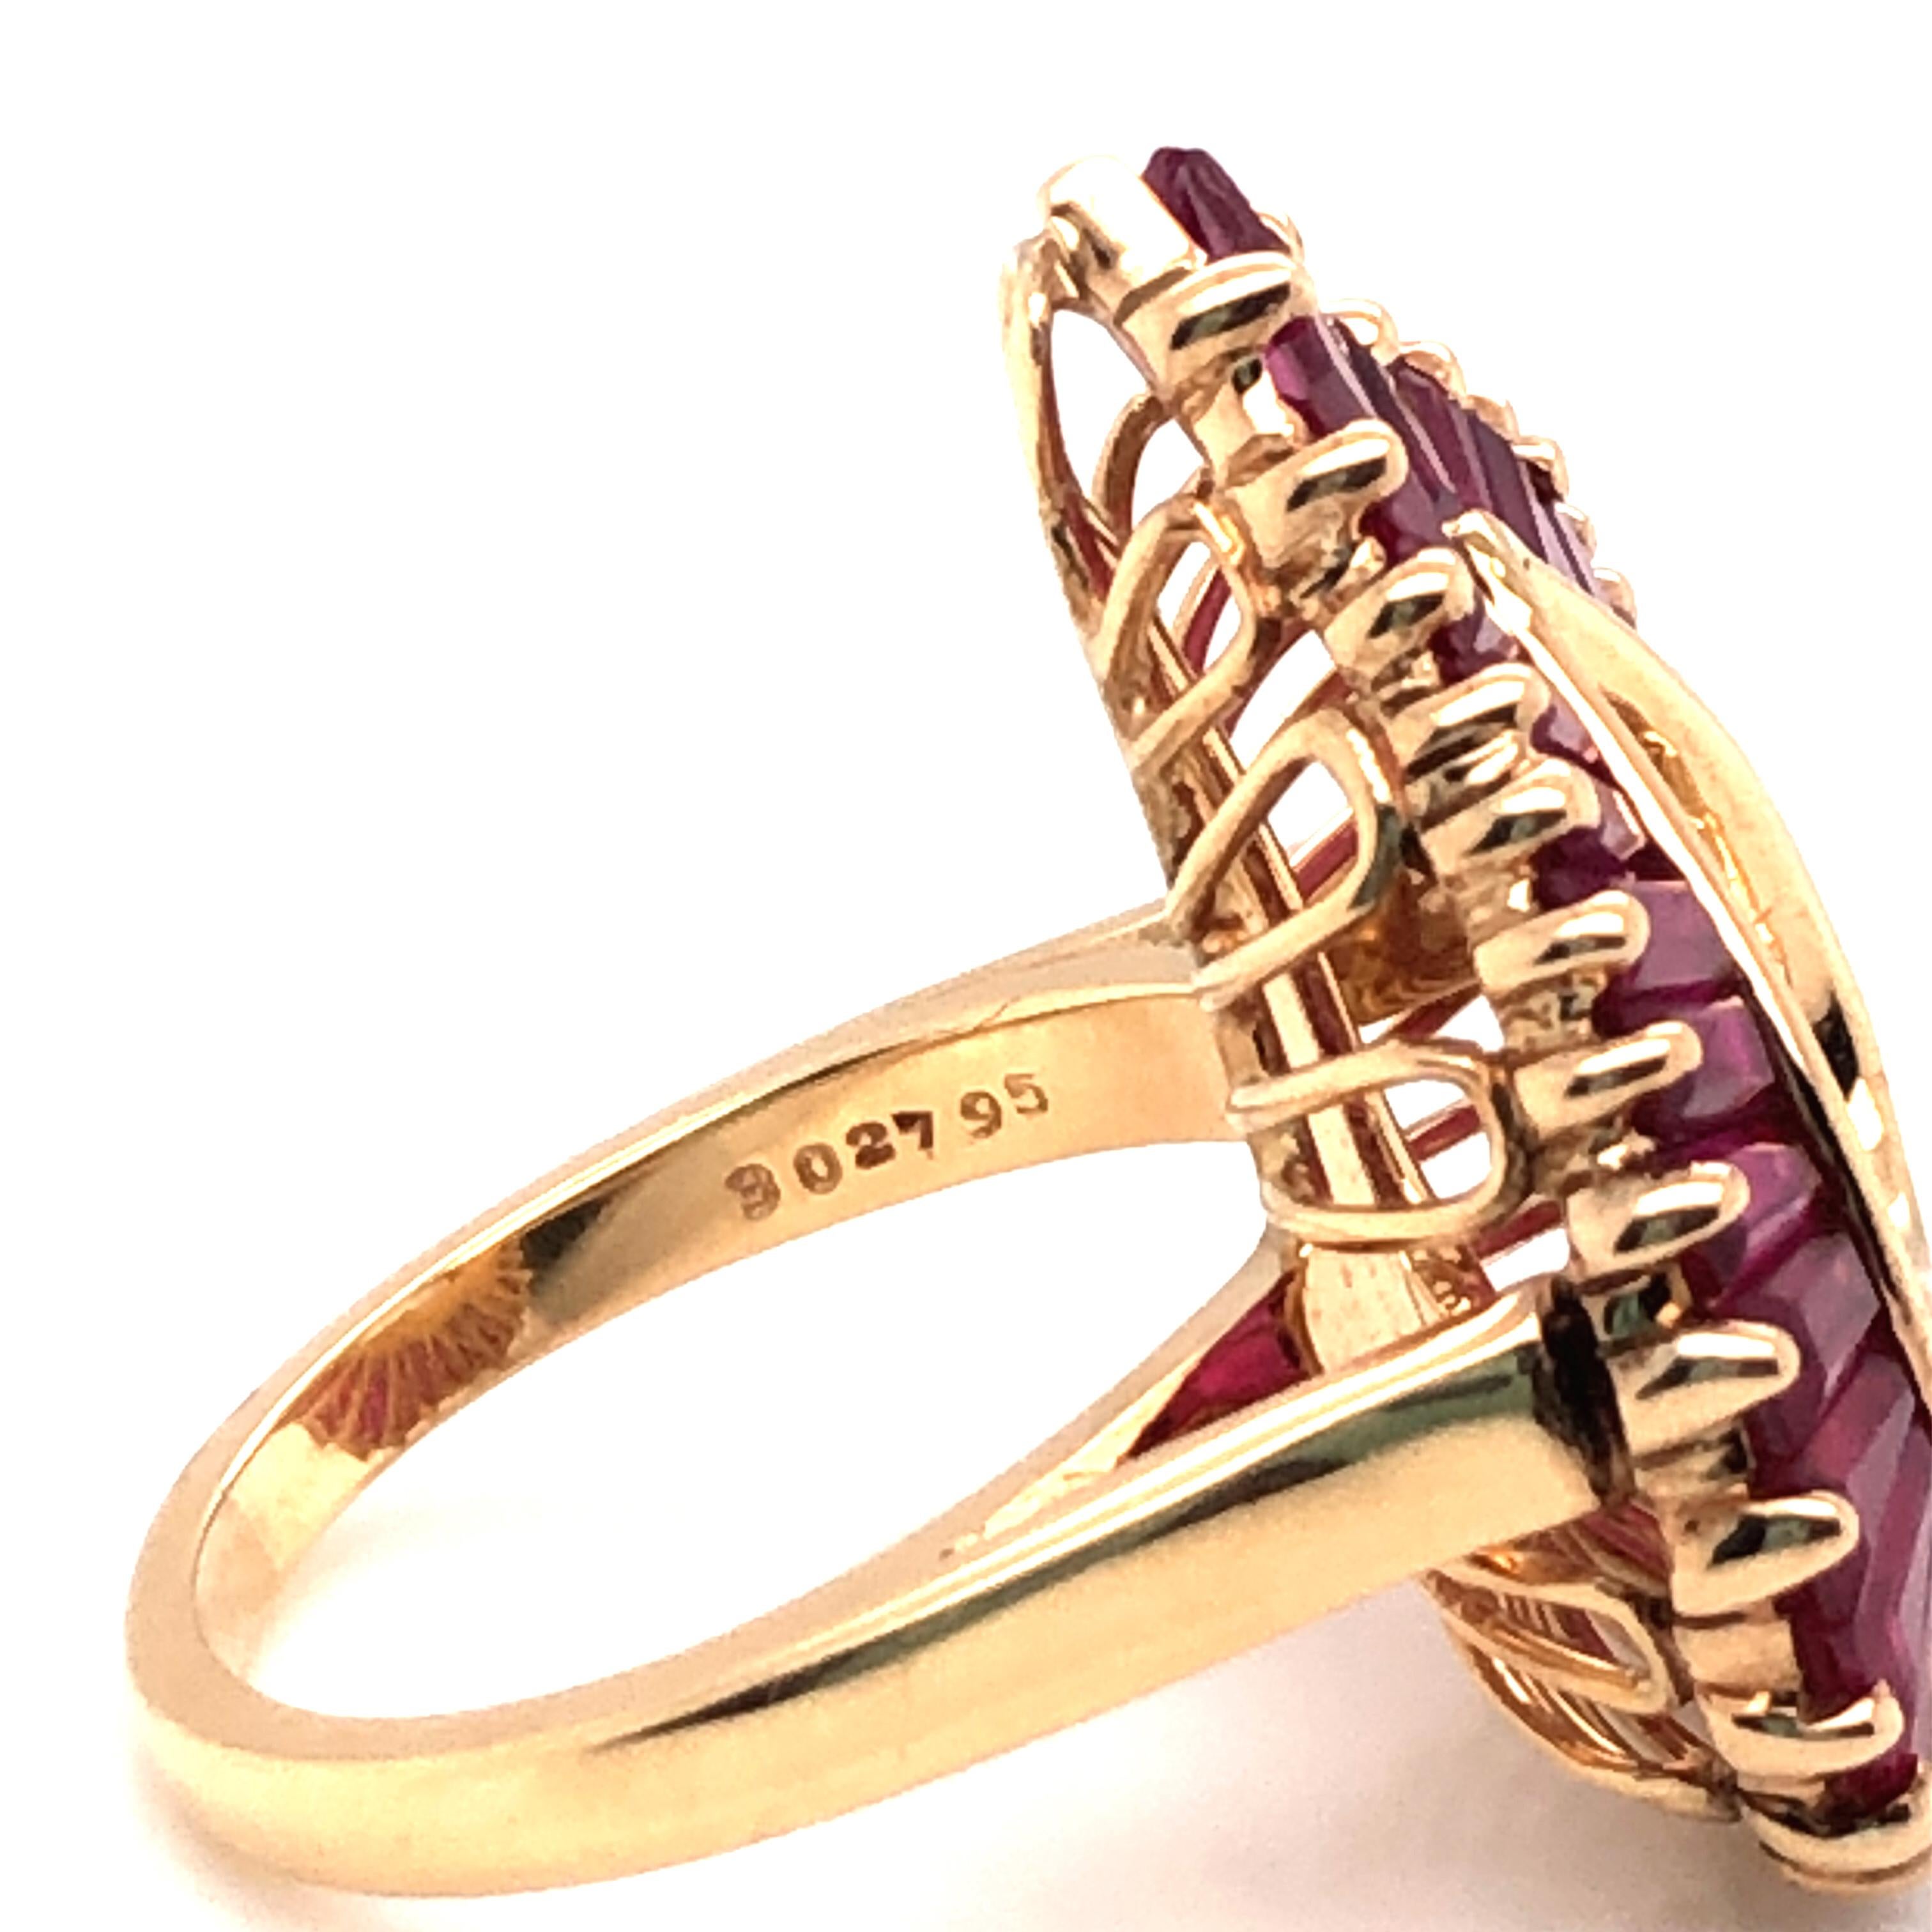 Women's Oscar Heyman 18 Karat Gold Ruby Heart Shaped 'Ballerina' Style Ring